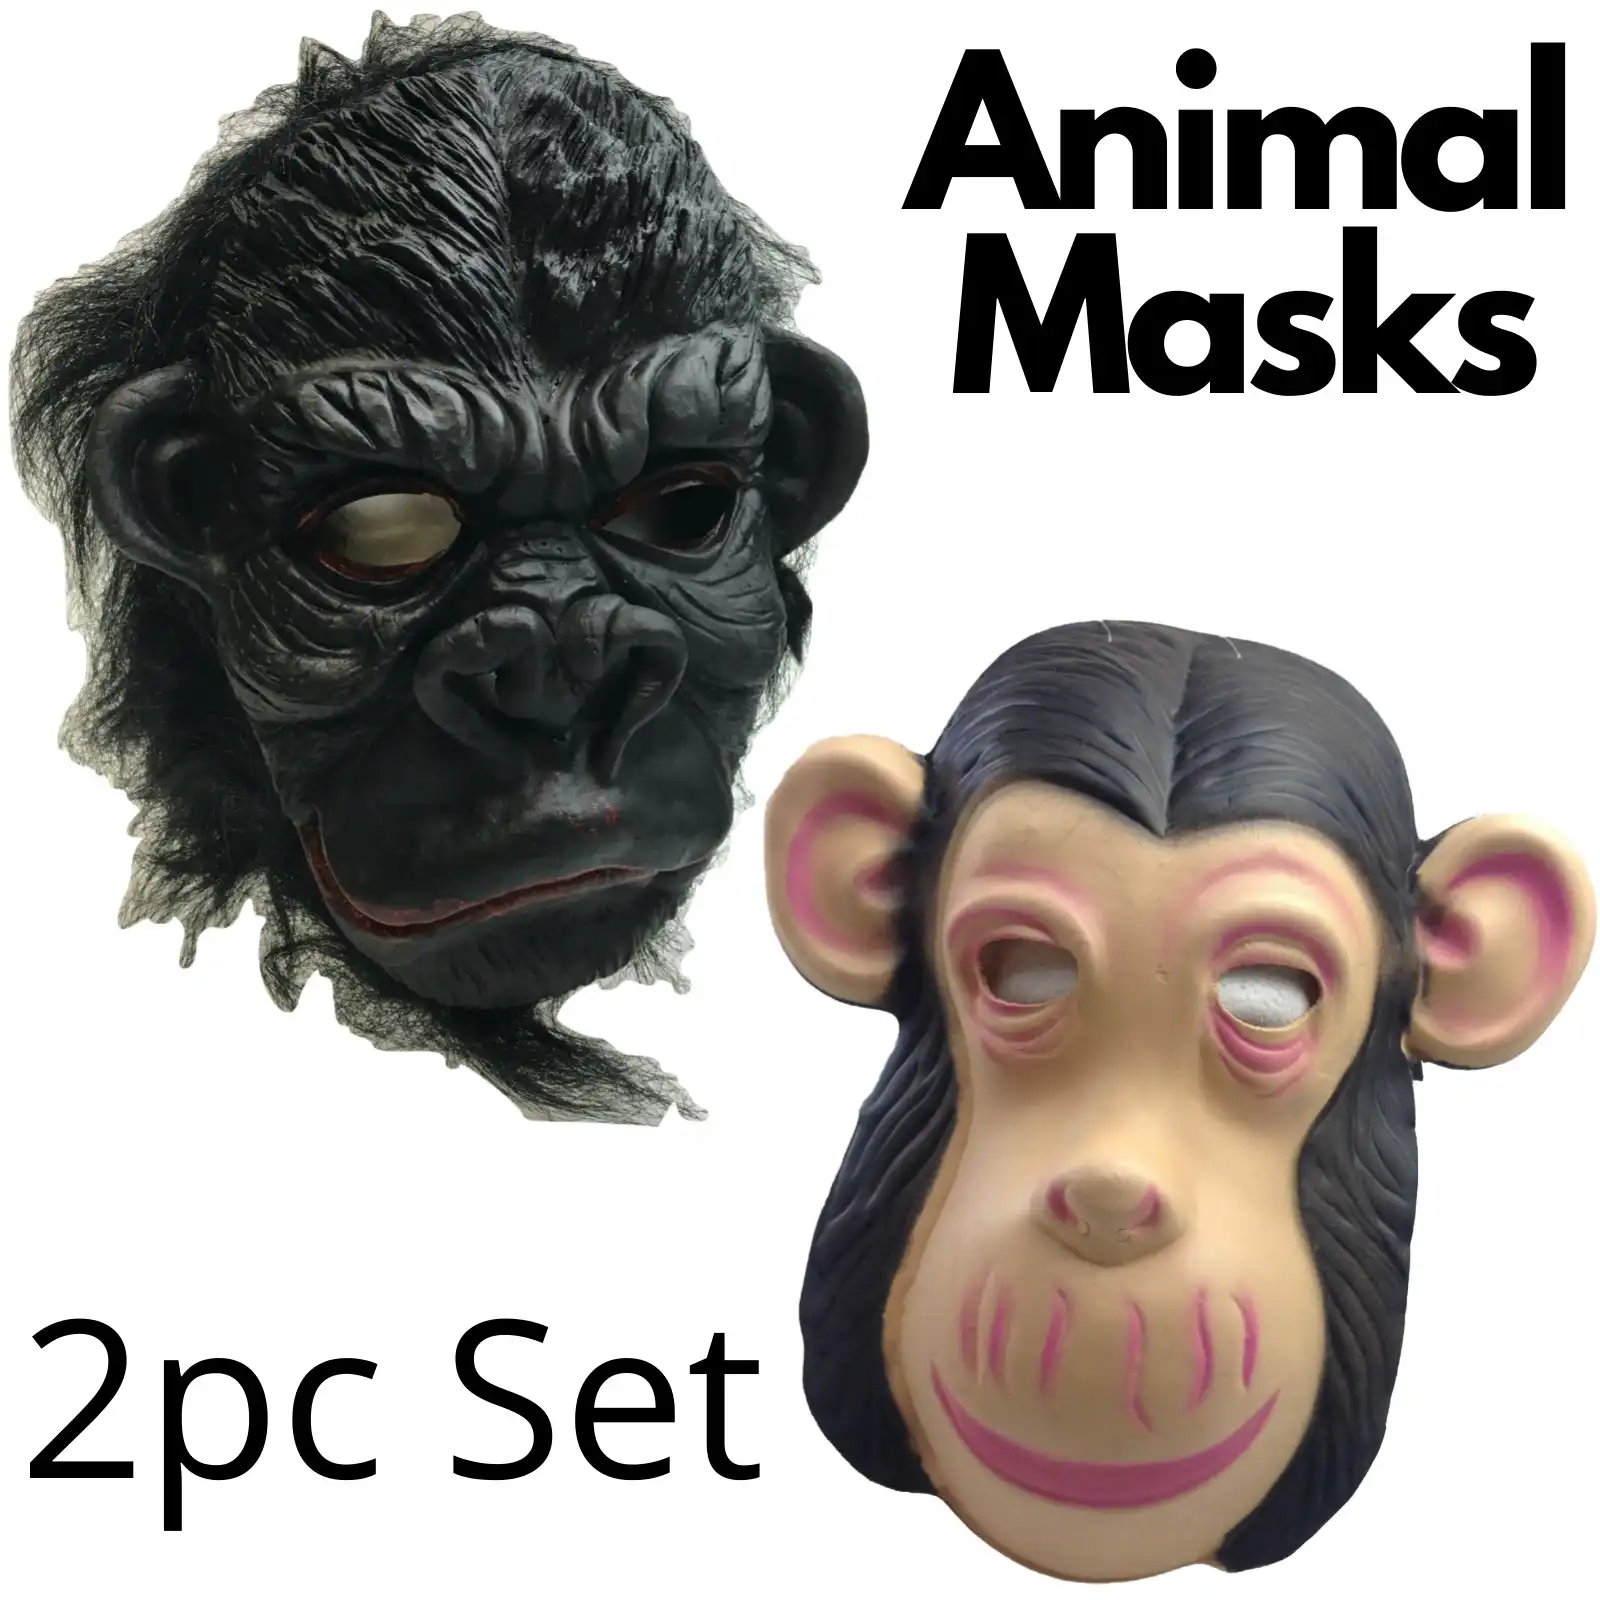 2pc Set Animal Masks Costume Party Gorilla Ape Chimp Monkey Halloween Novelty